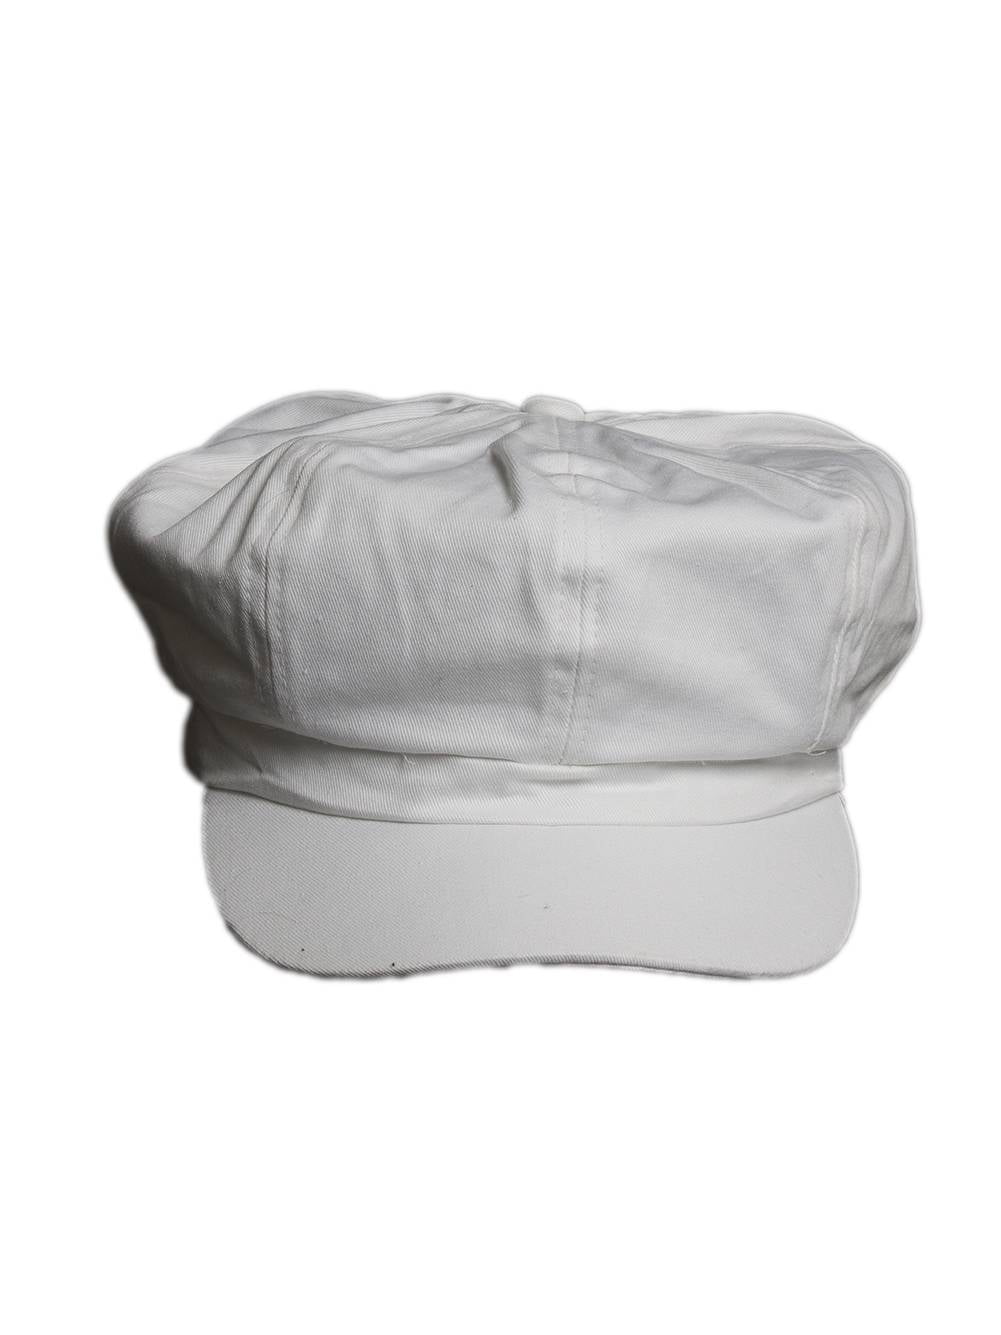 White Cotton Elastic Newsboy Caps - One size fits most - Walmart.com